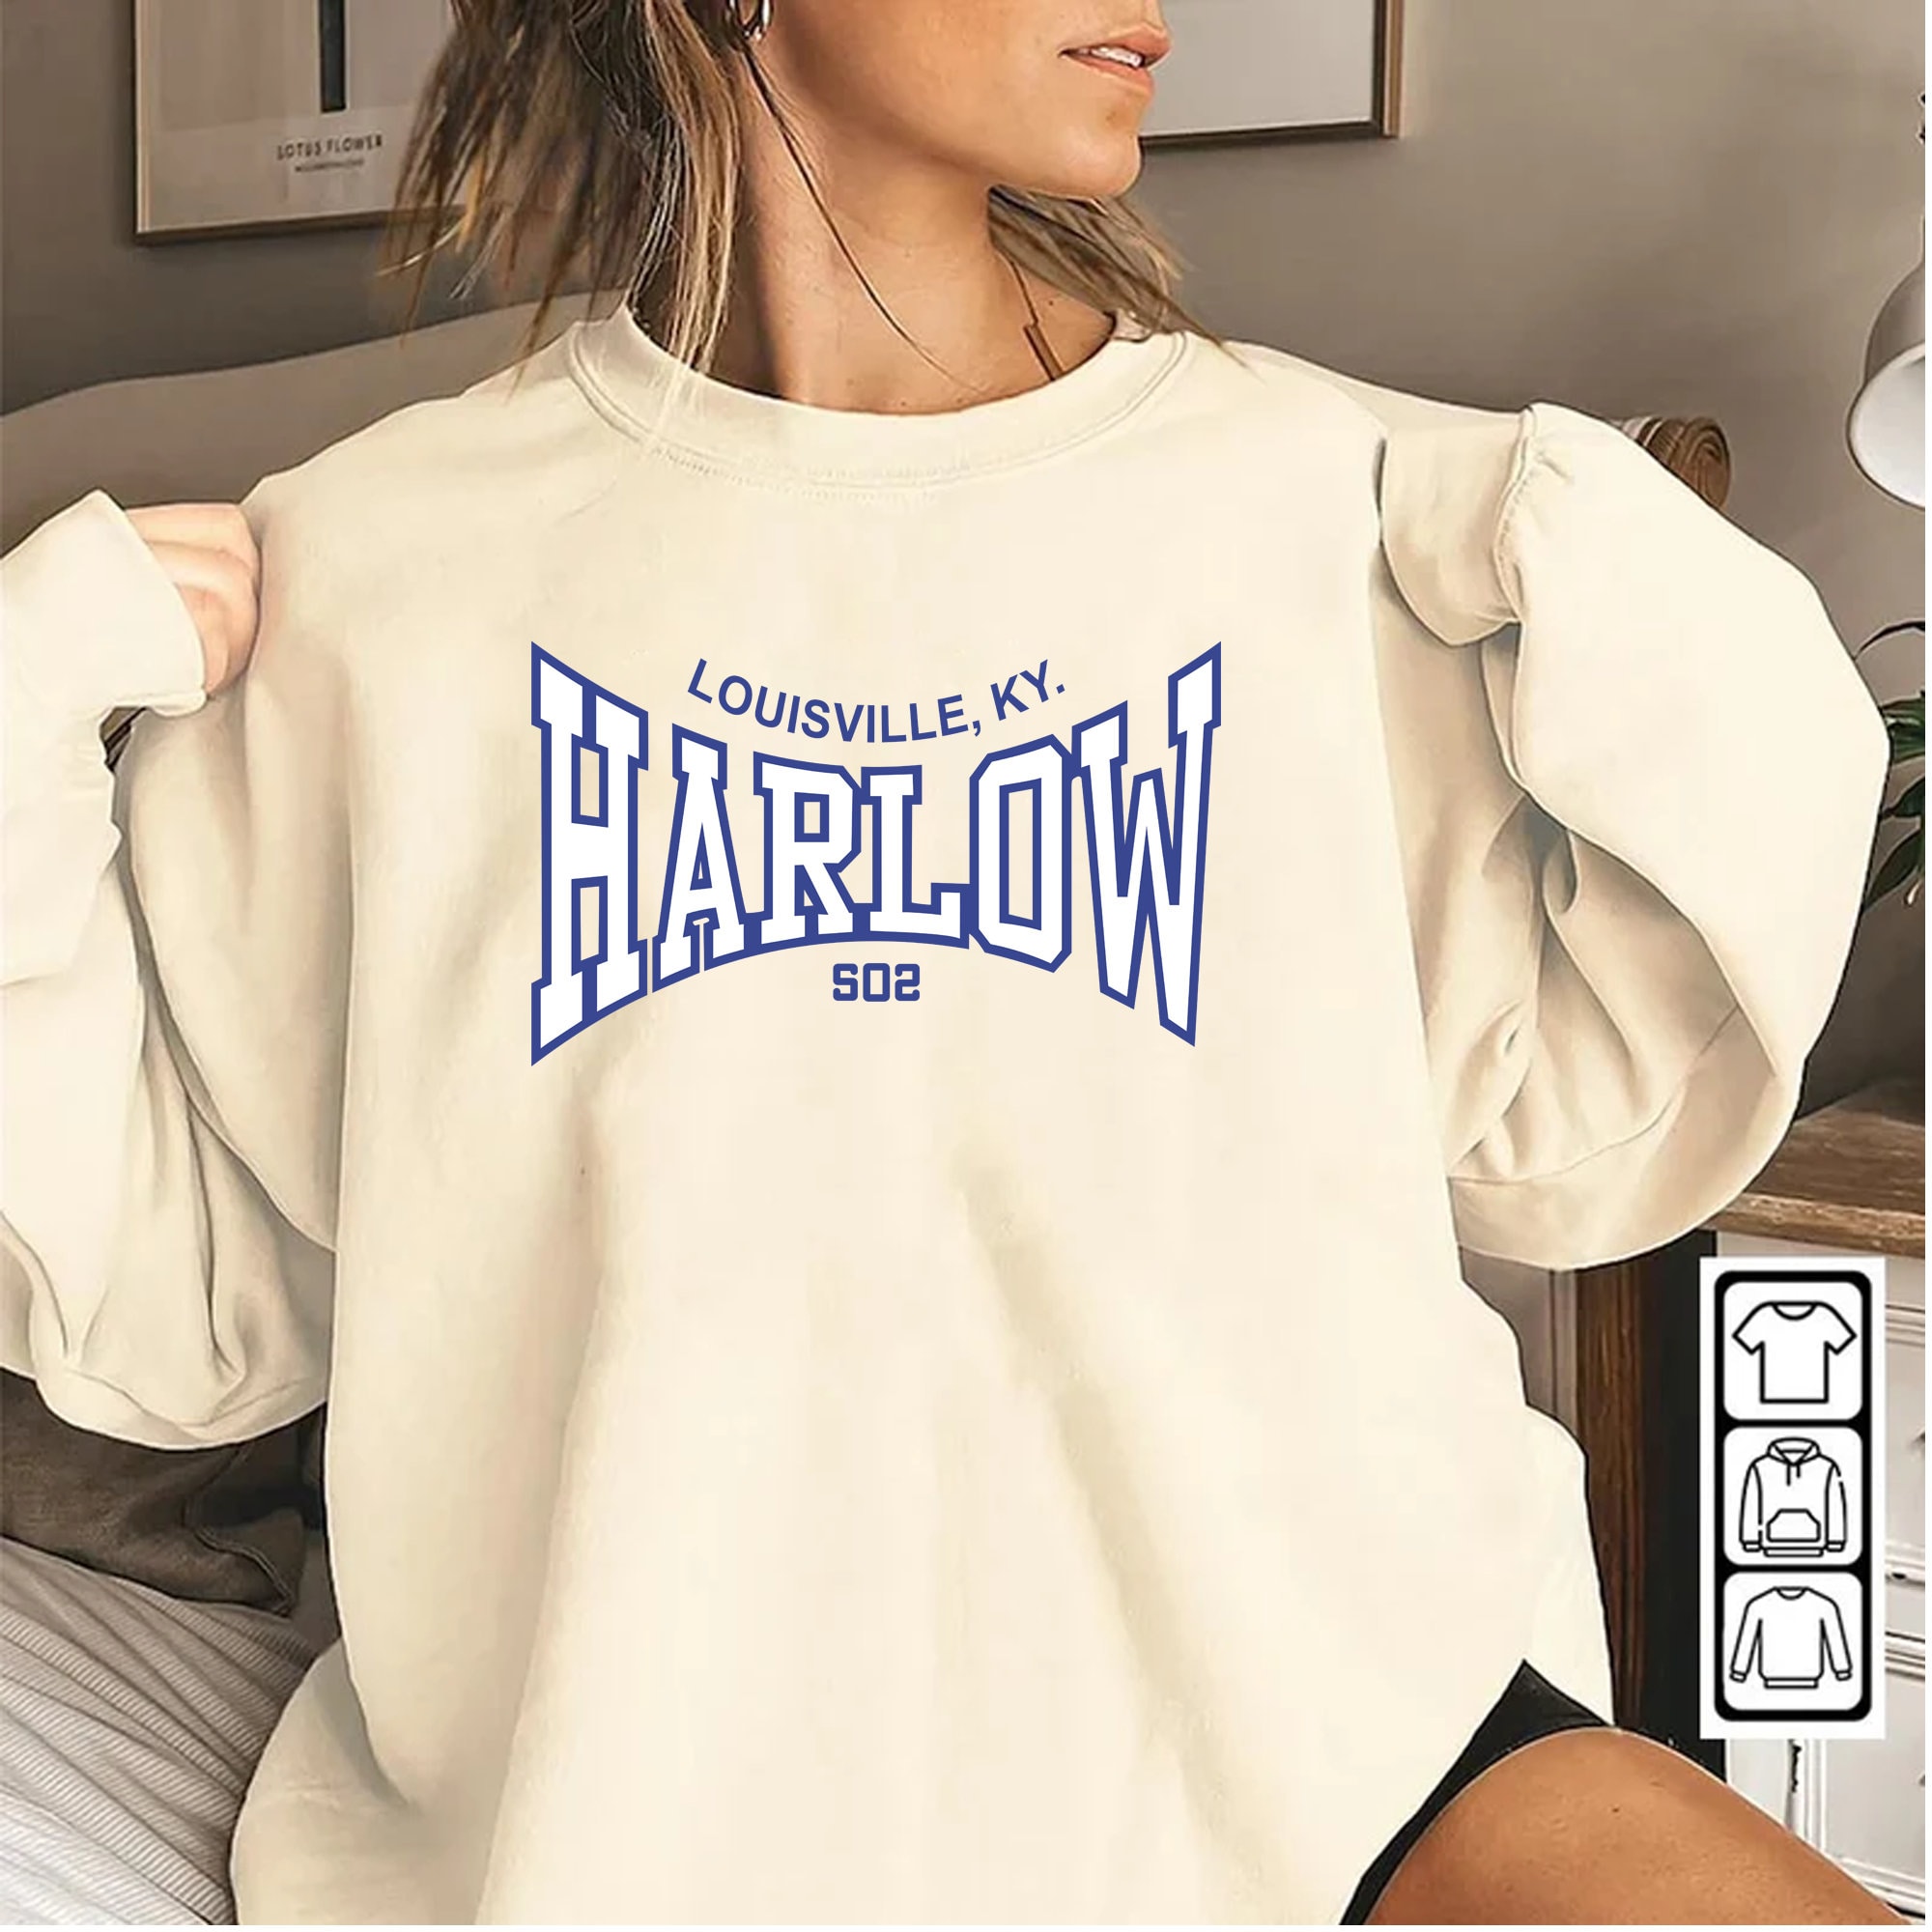 Women Sweatshirts and Hoodies - Louisville 